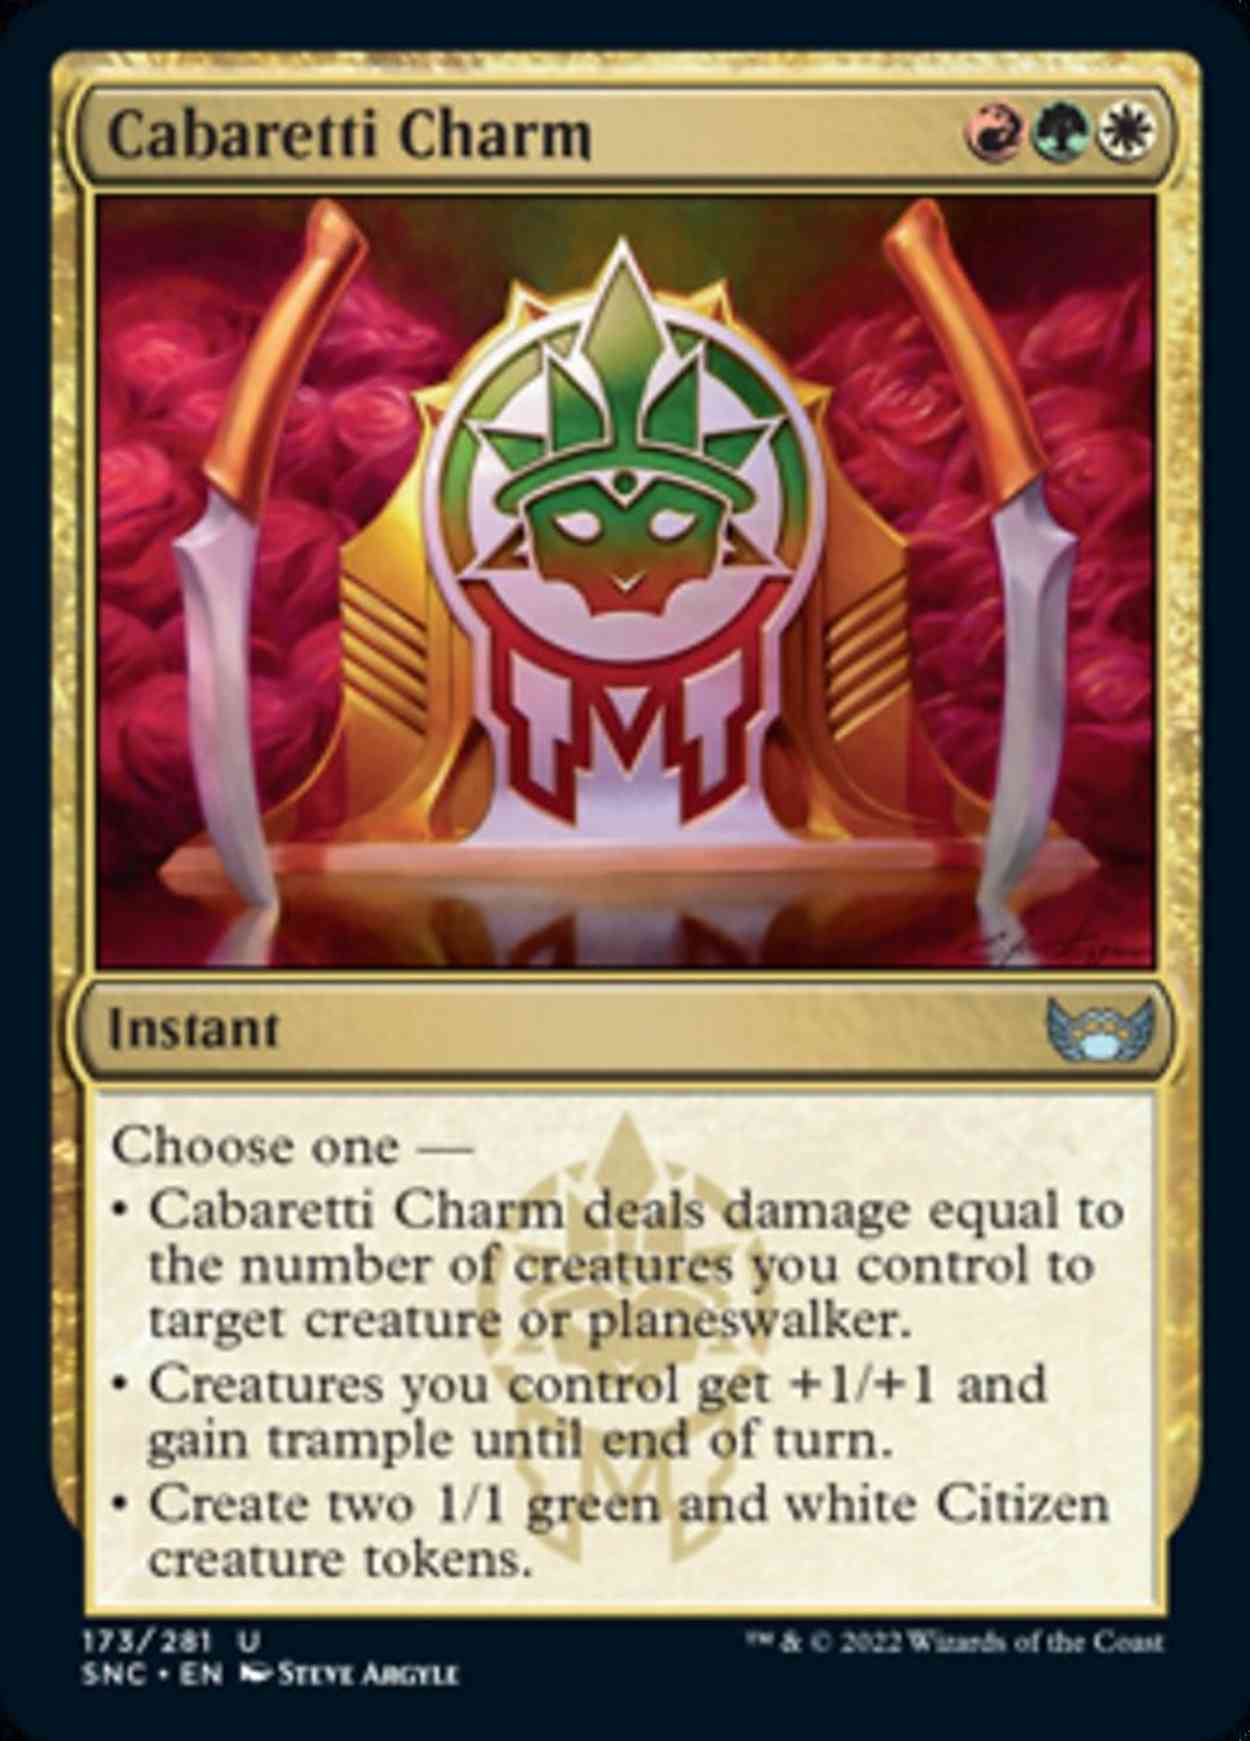 Cabaretti Charm magic card front